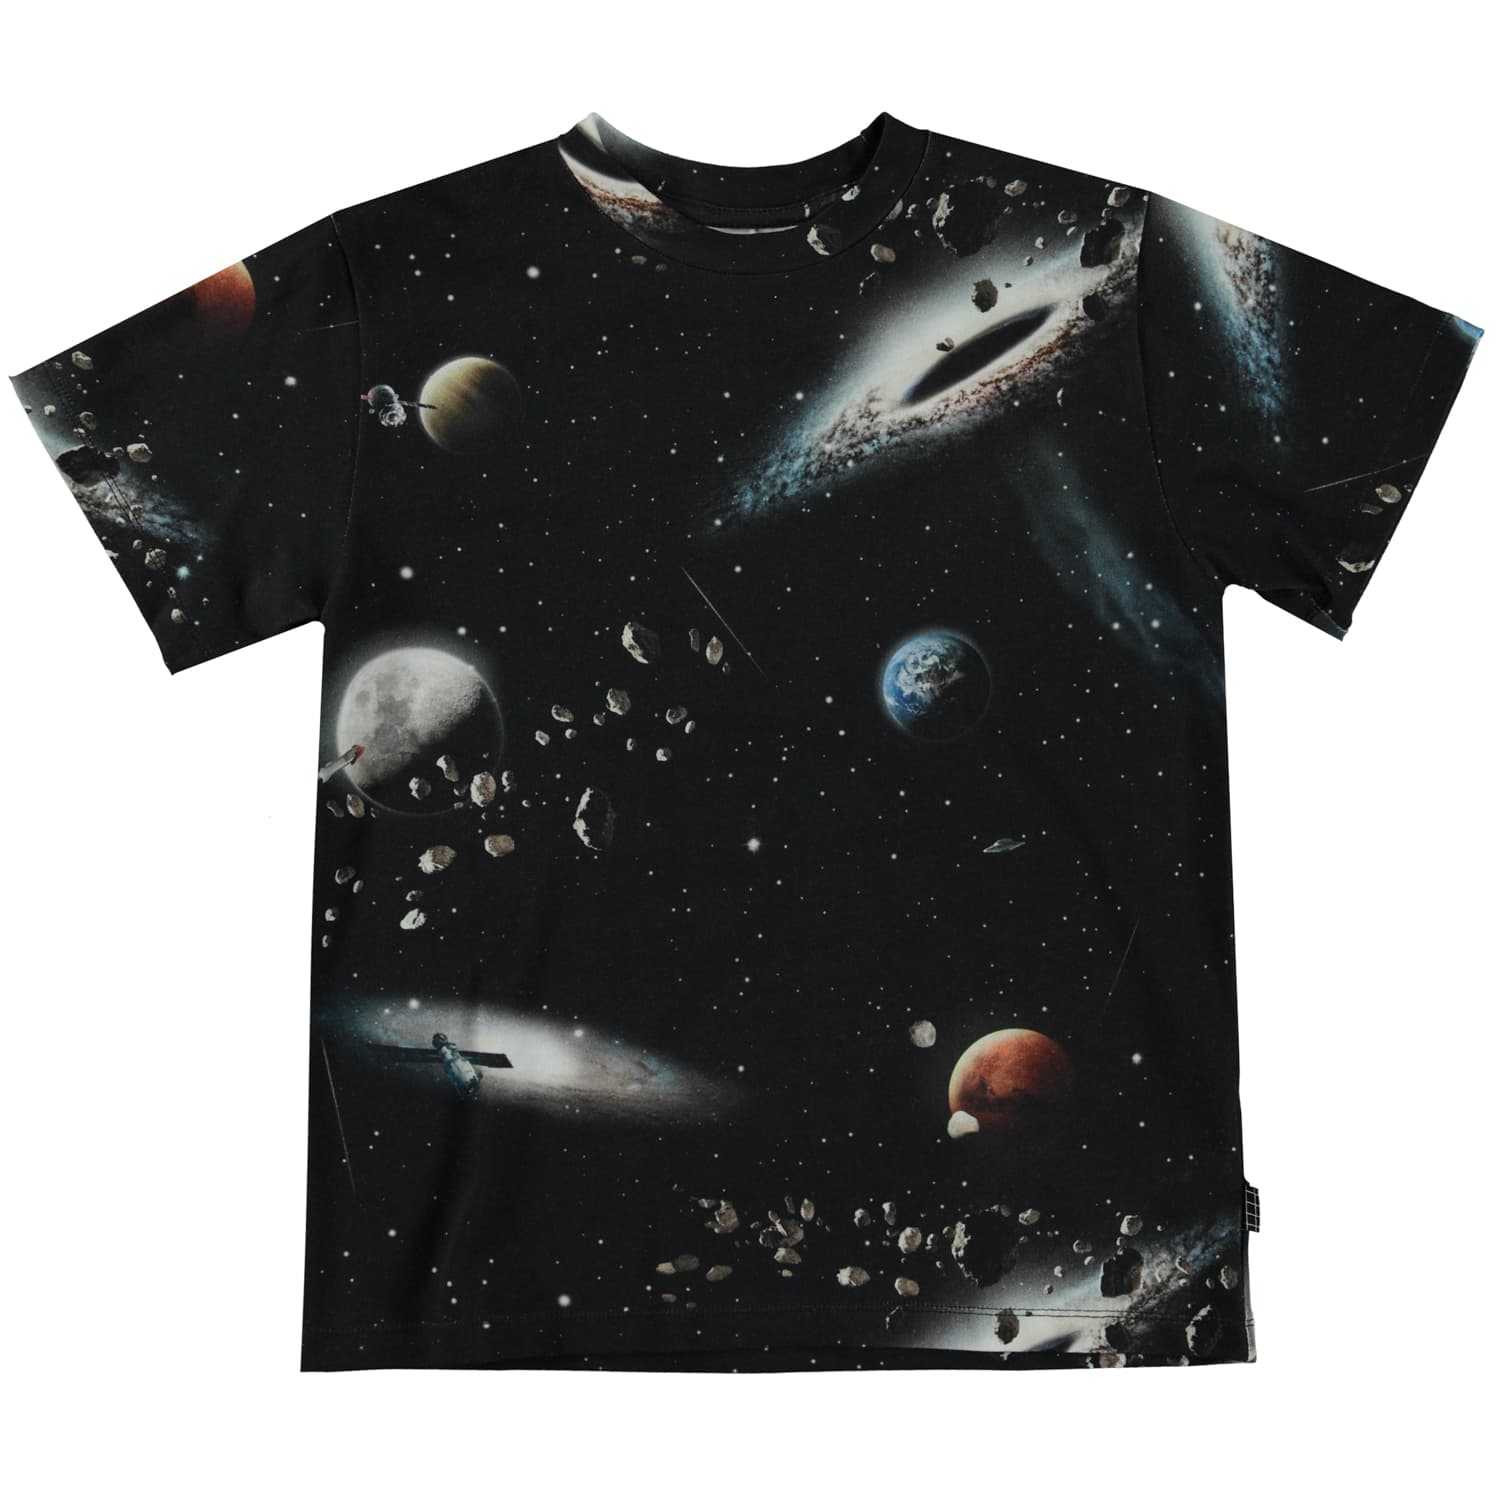 Riley T-shirt (Make Space)